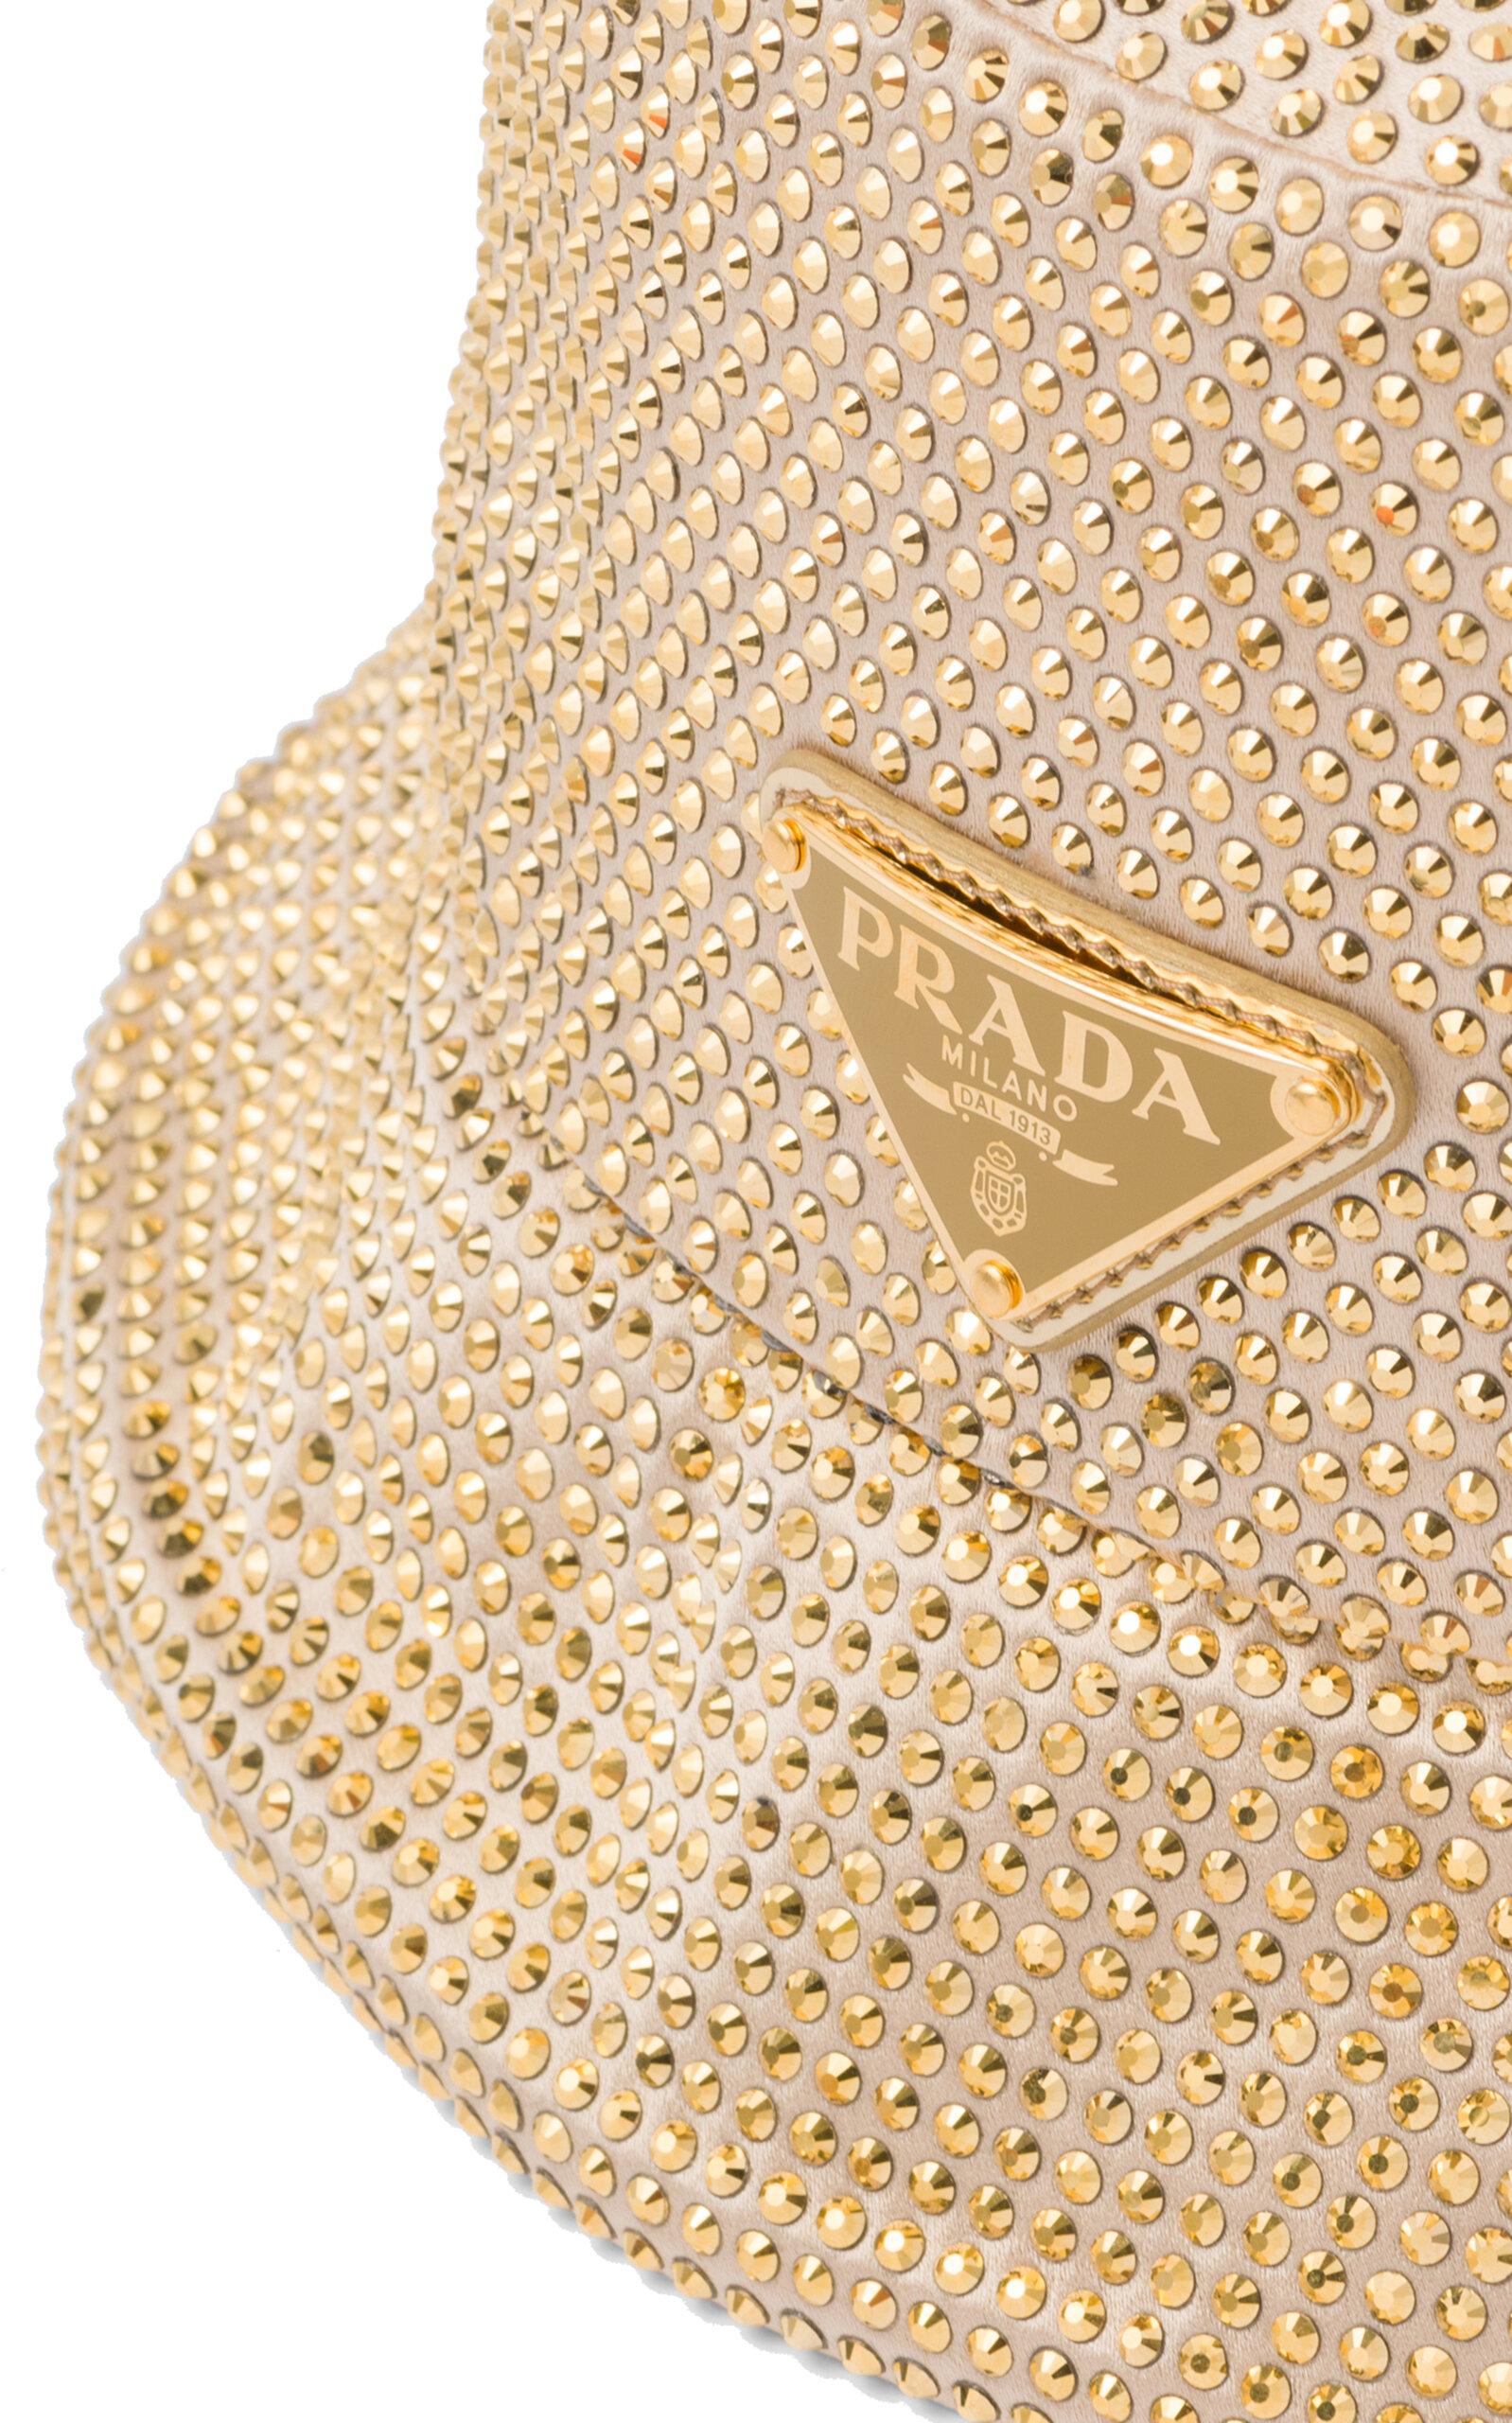 Prada Crystal-embellished Satin Bucket Hat in Natural | Lyst